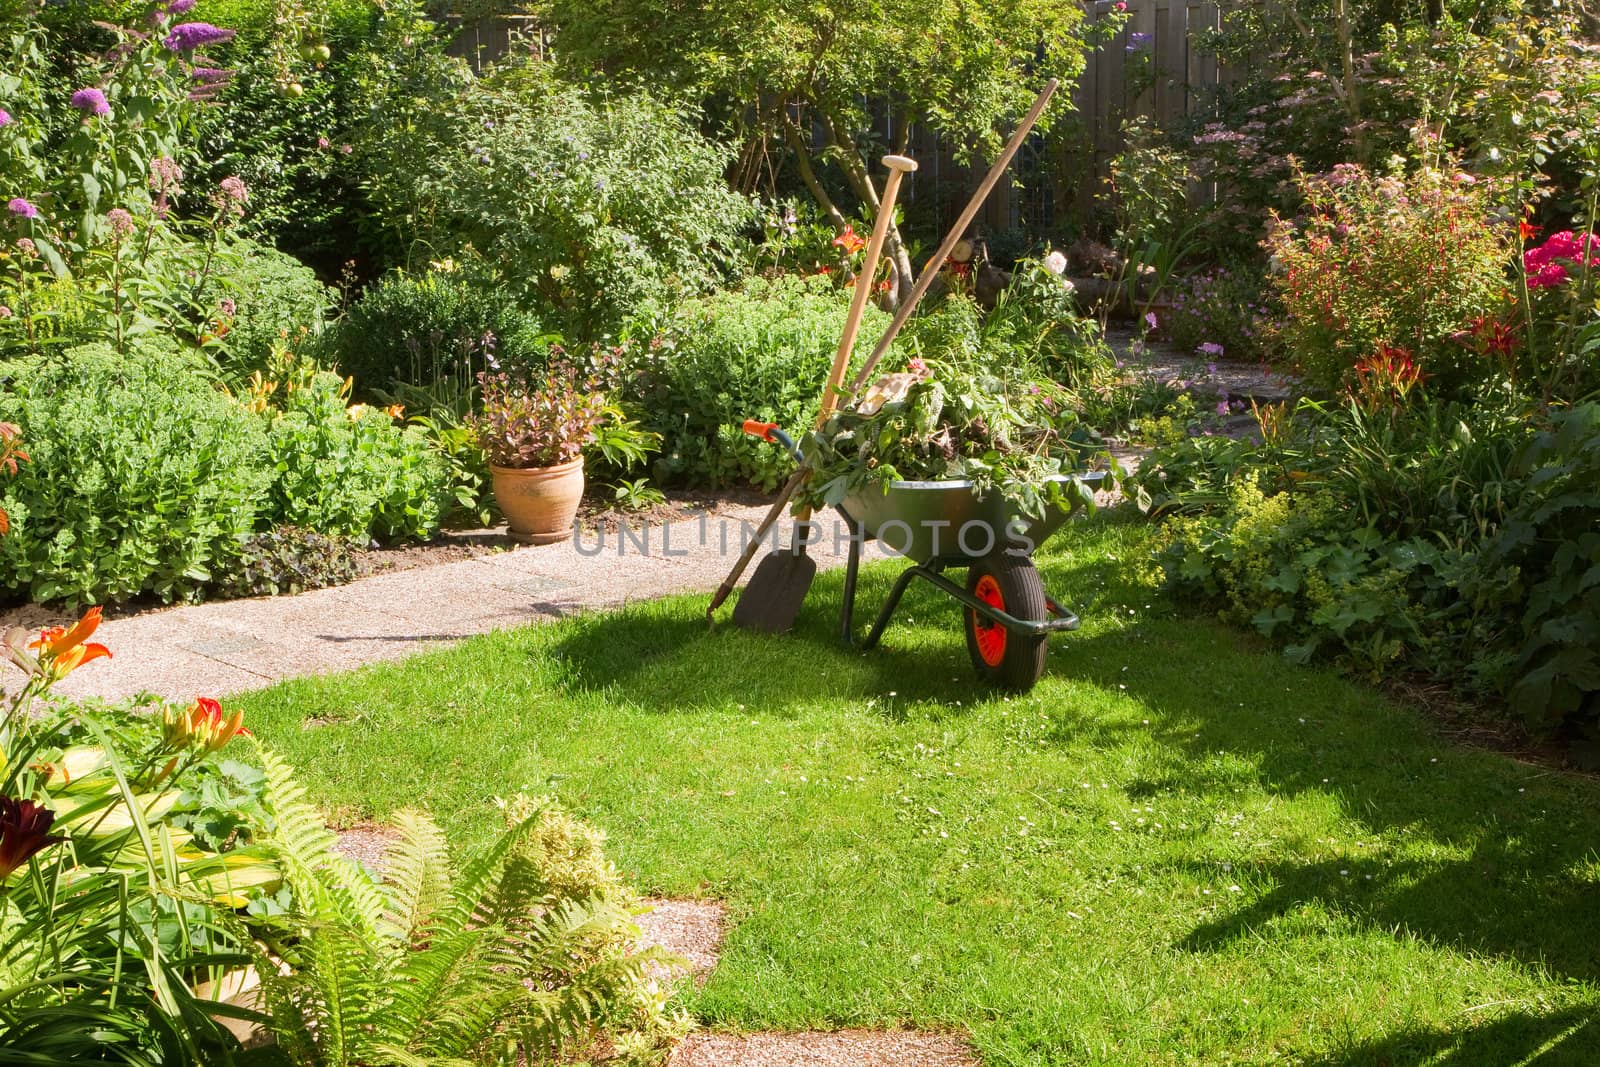 Work in summer garden in the morning with wheelbarrow, shovel and rake - horizontal